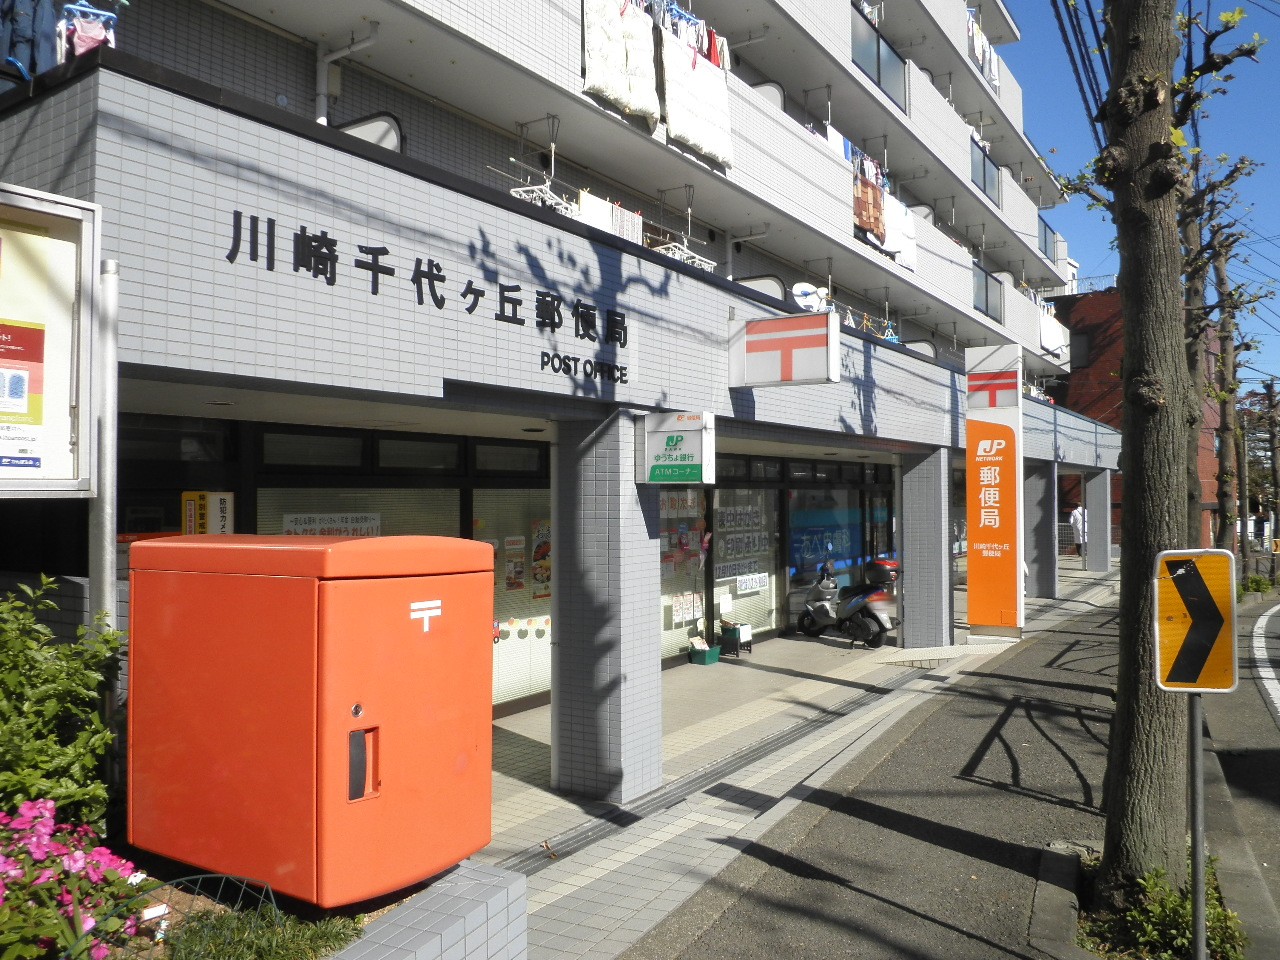 post office. 500m to Kawasaki Chiyogaoka post office (post office)